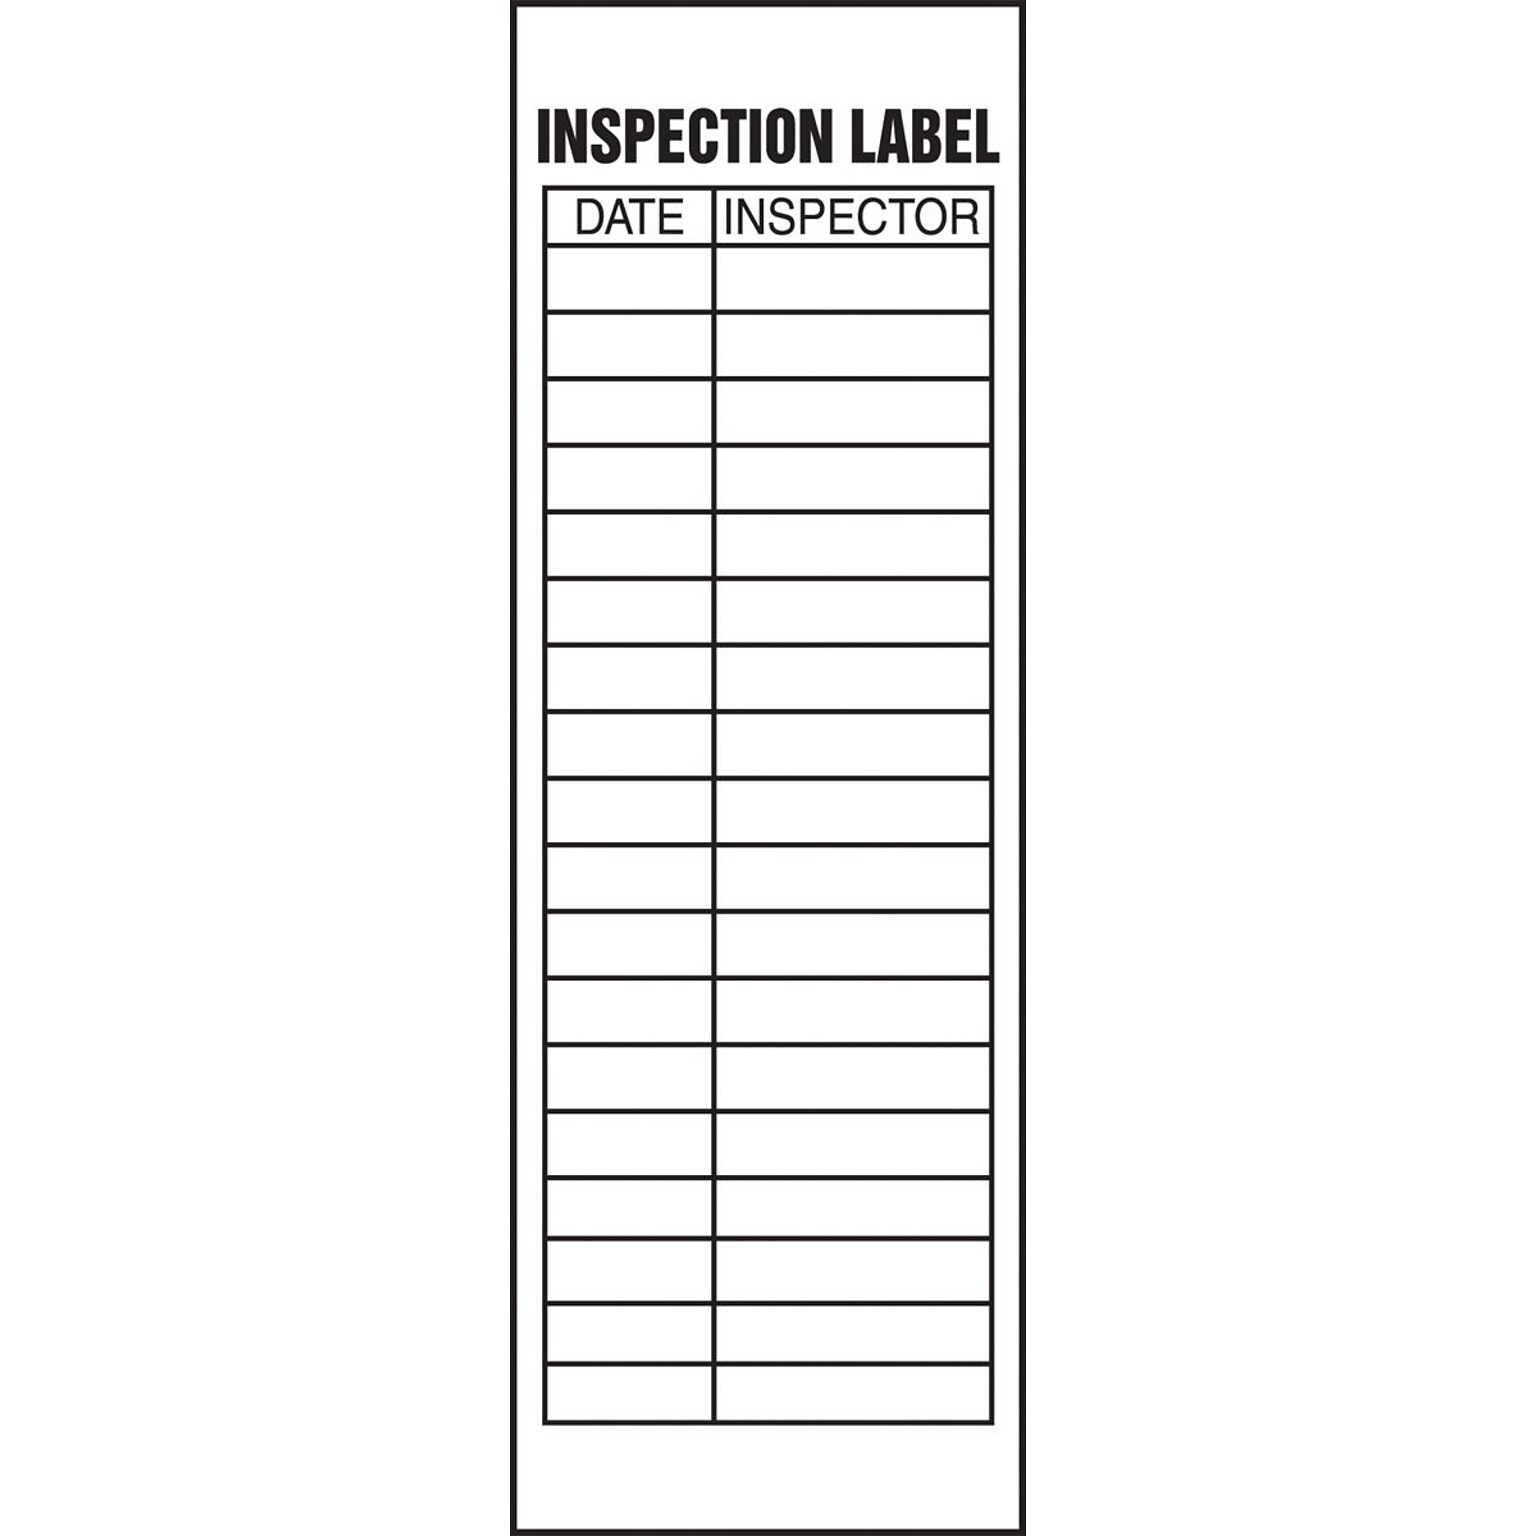 Accuform Safety Label, INSPECTION LABEL, 6 x 2, Adhesive Vinyl, 5/Pack (LELC525VSP)